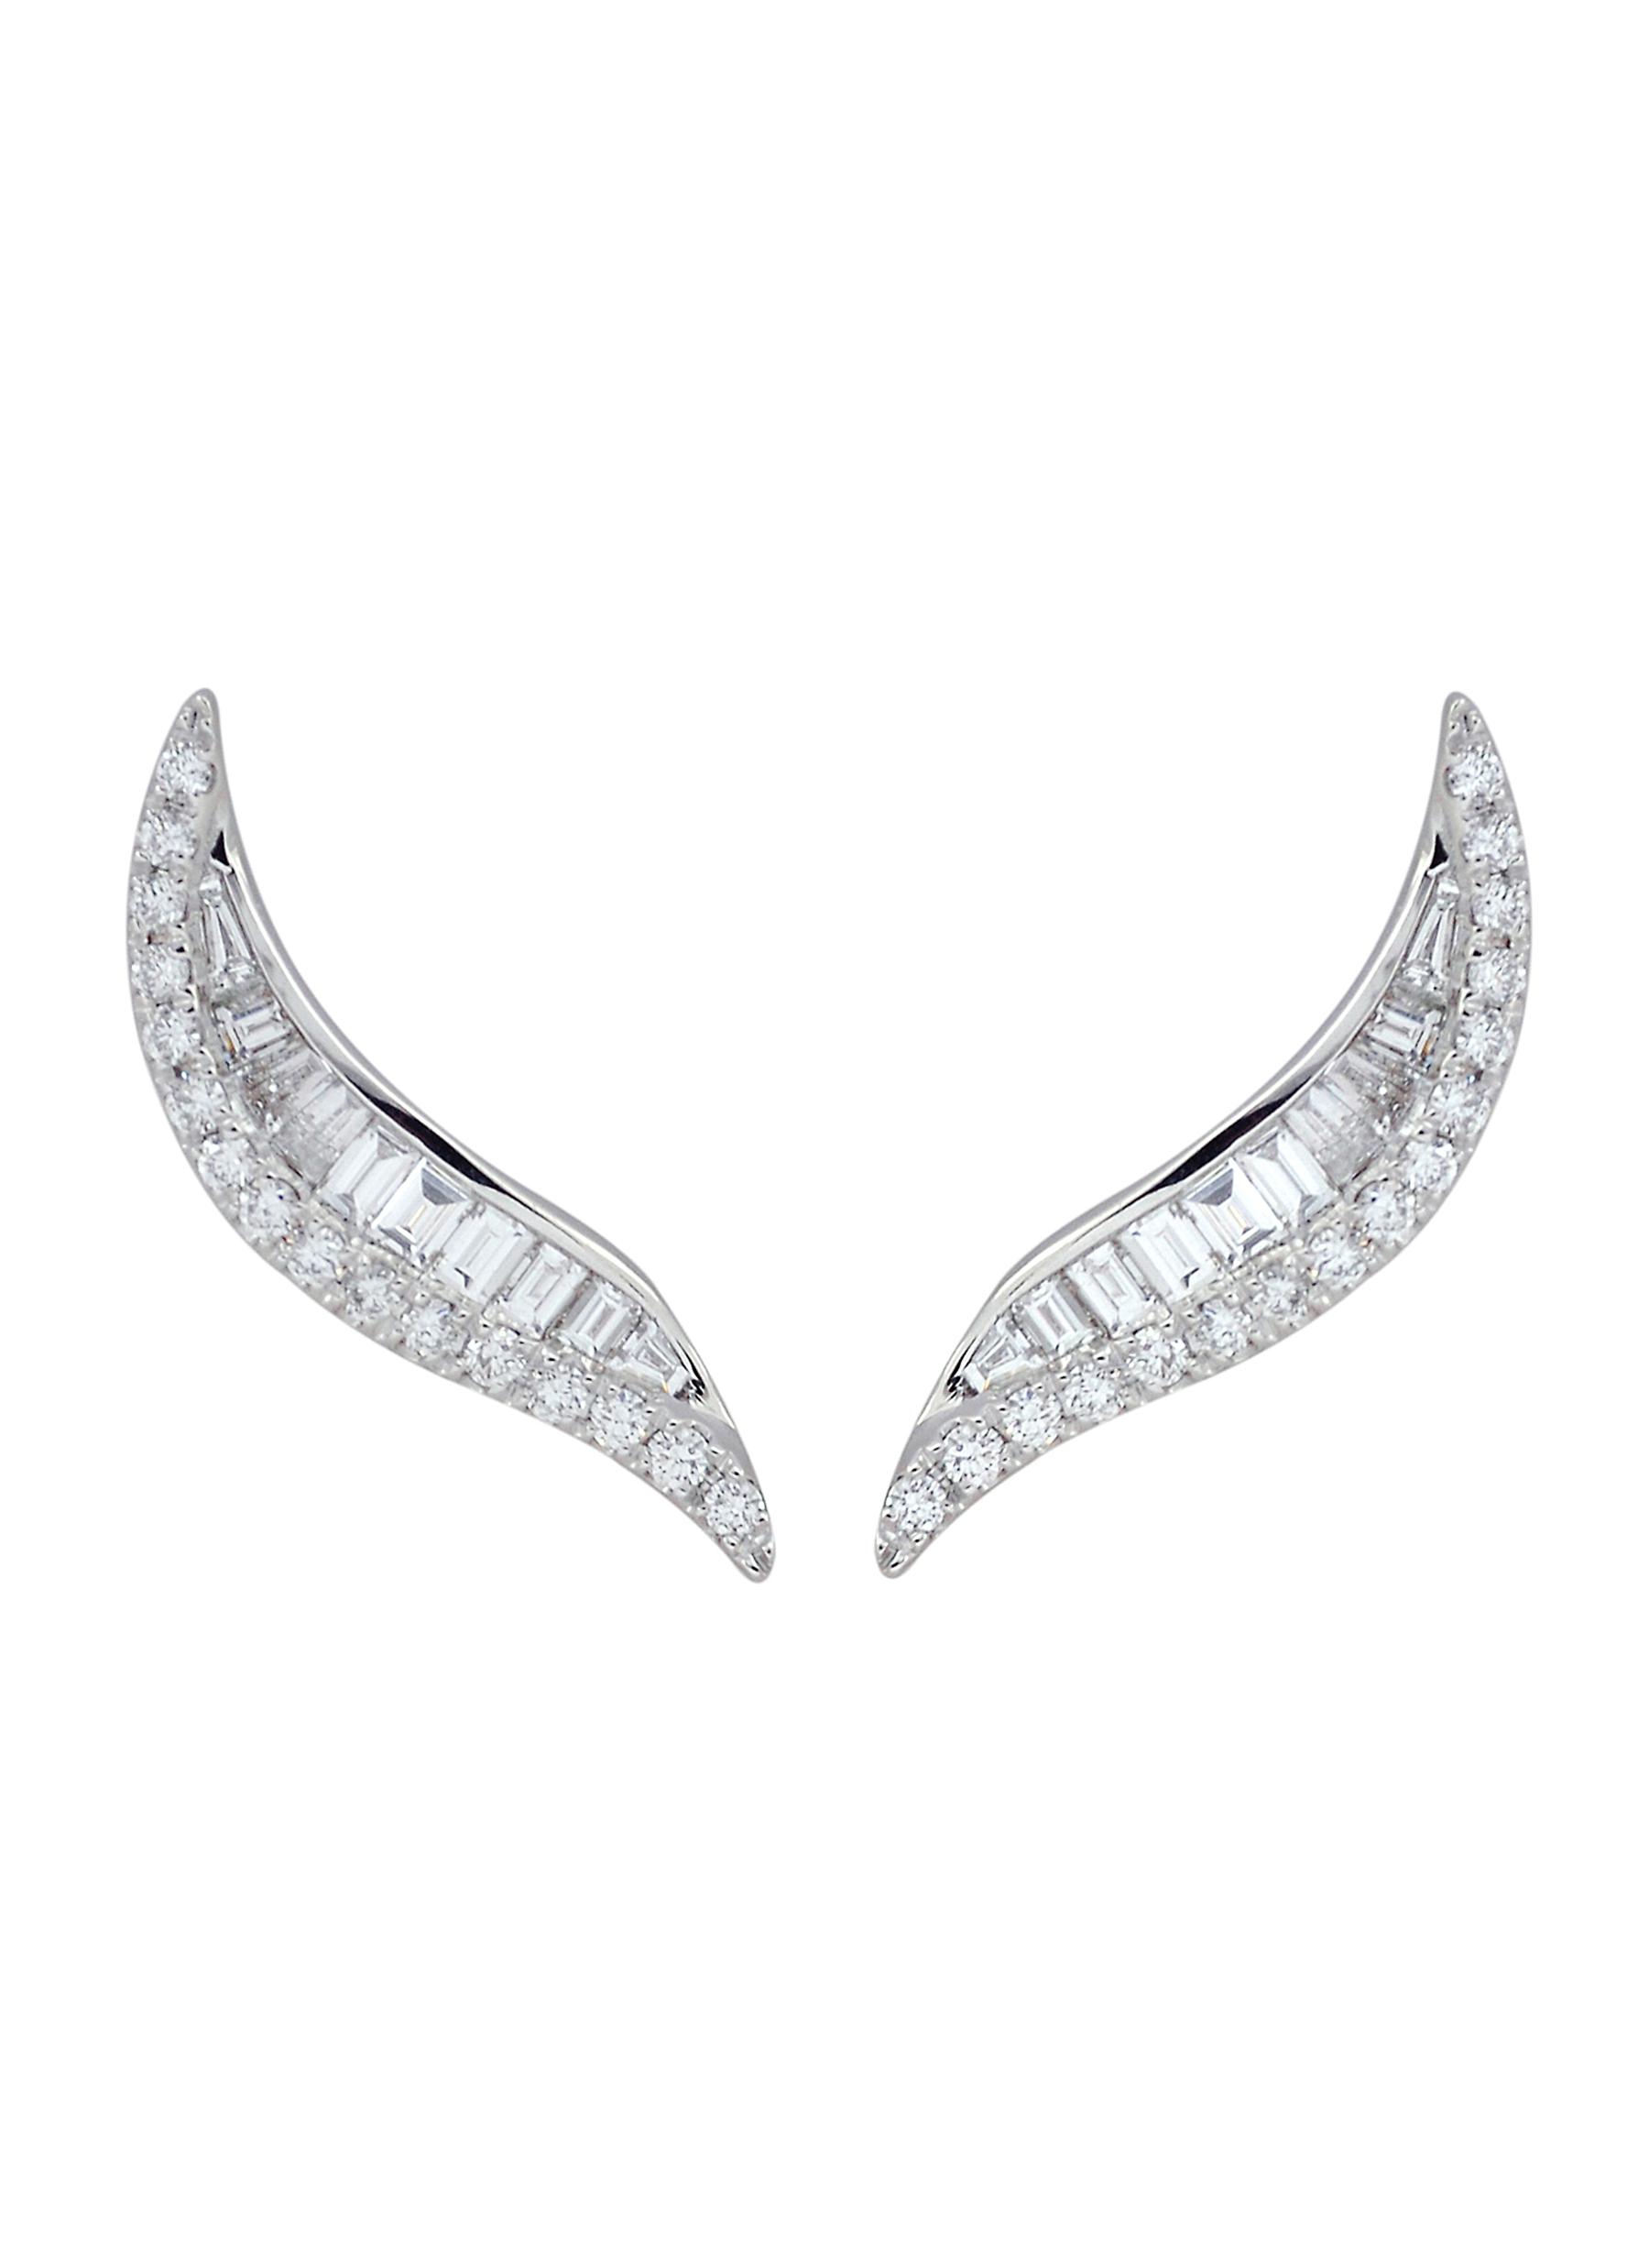 KAVANT & SHARART ‘Talay' Diamond 18K White Gold Wave Stud Earrings